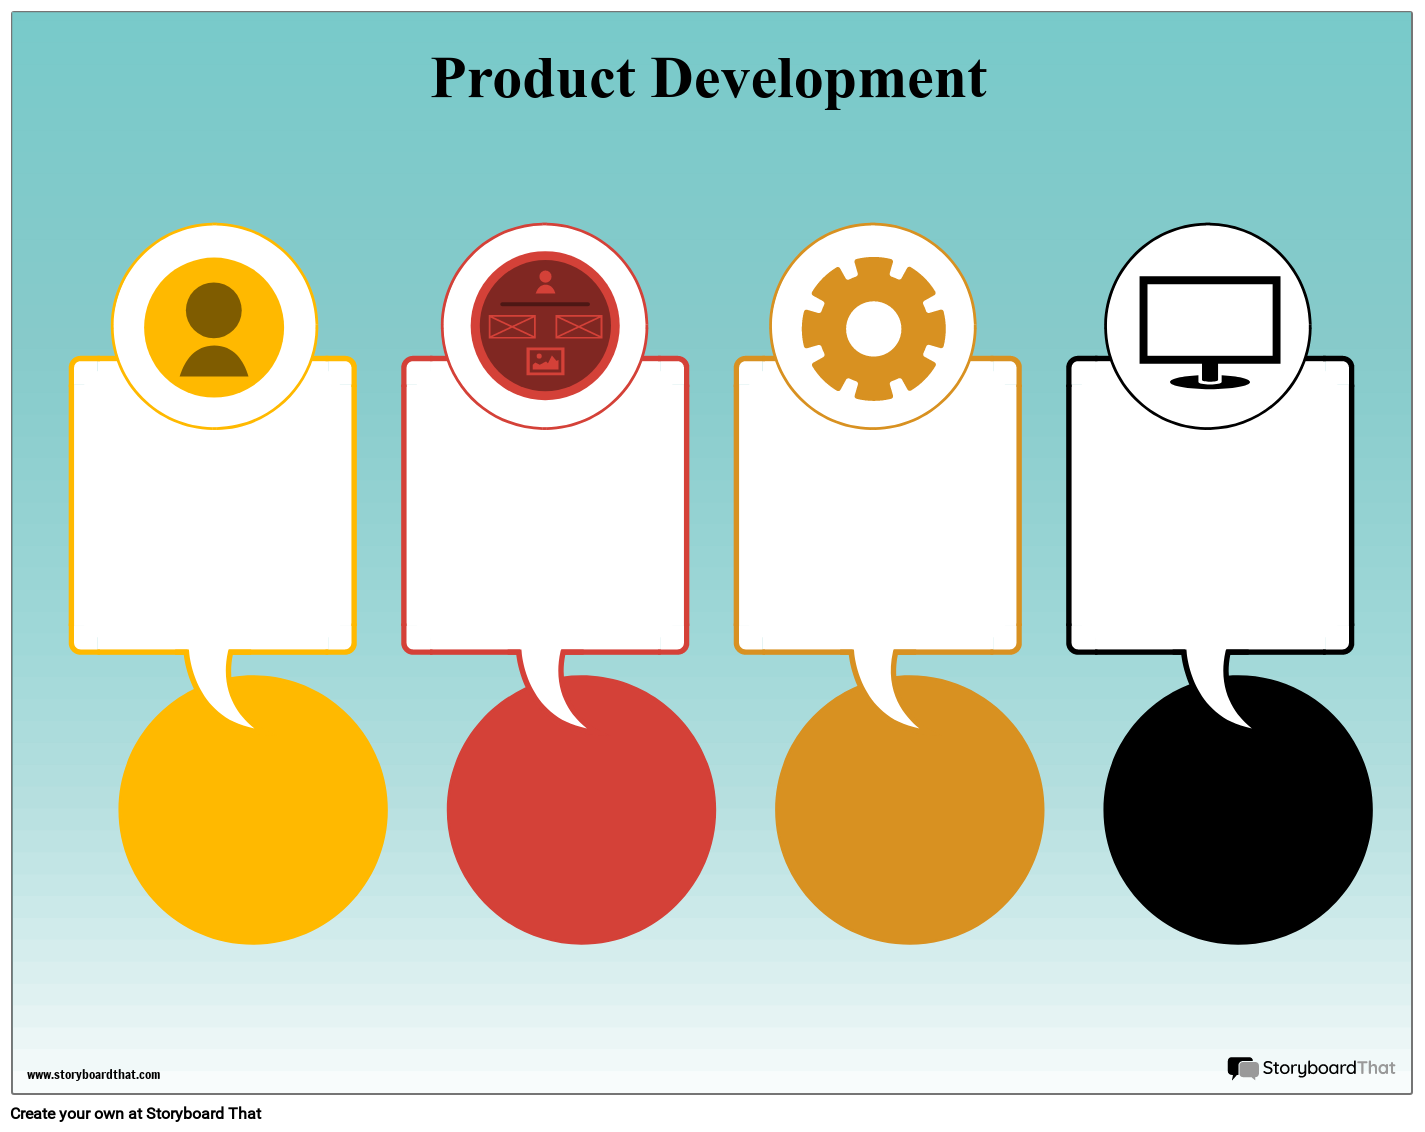 Product Development 1